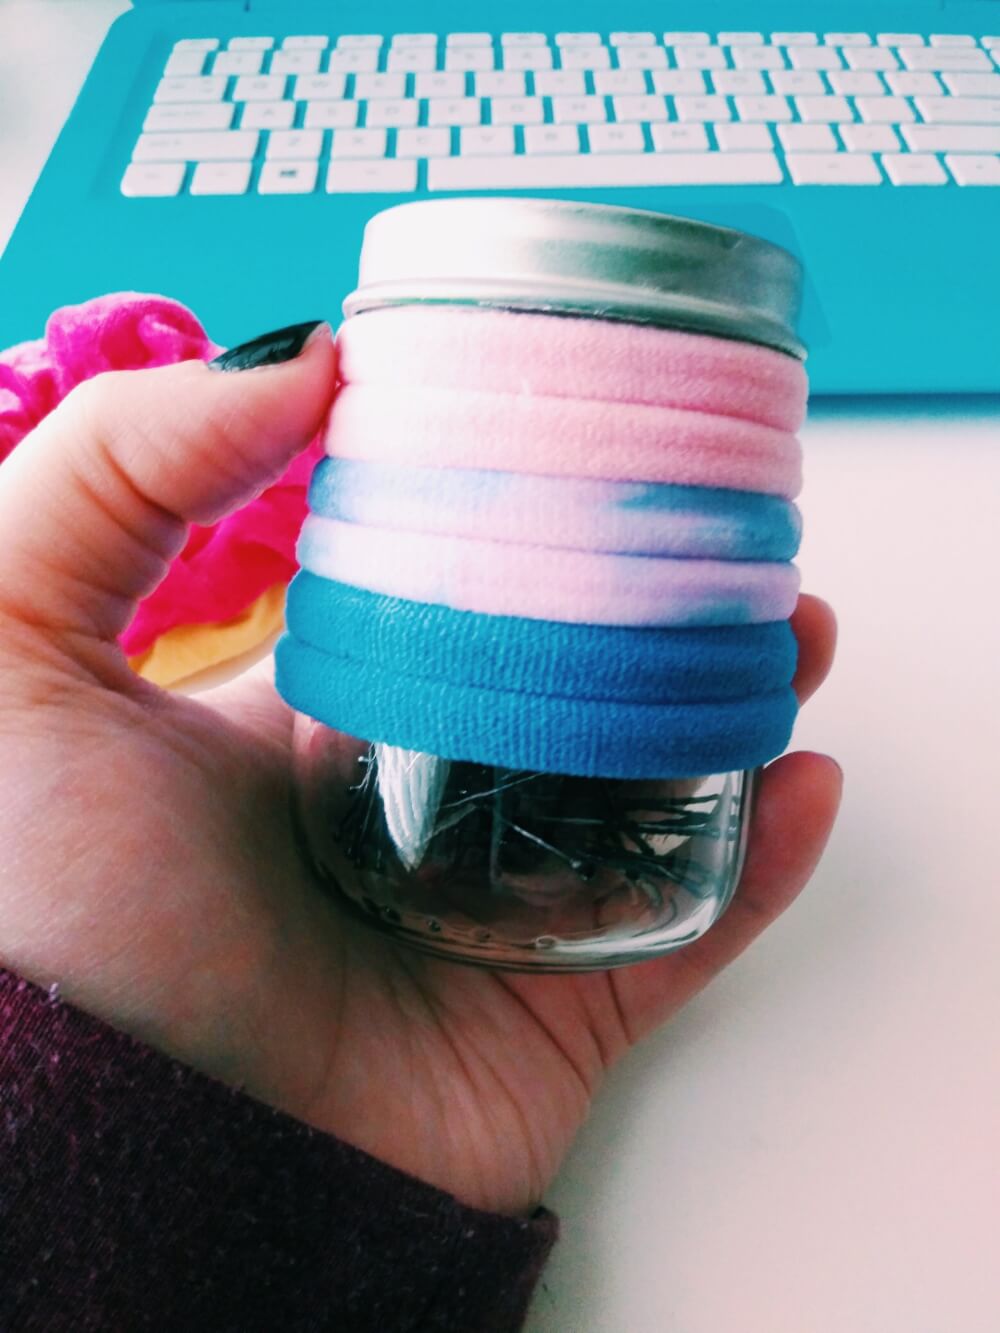 Baby food jar holding bobby pins; spray-painted silver lid; hair elastics around outside of jar